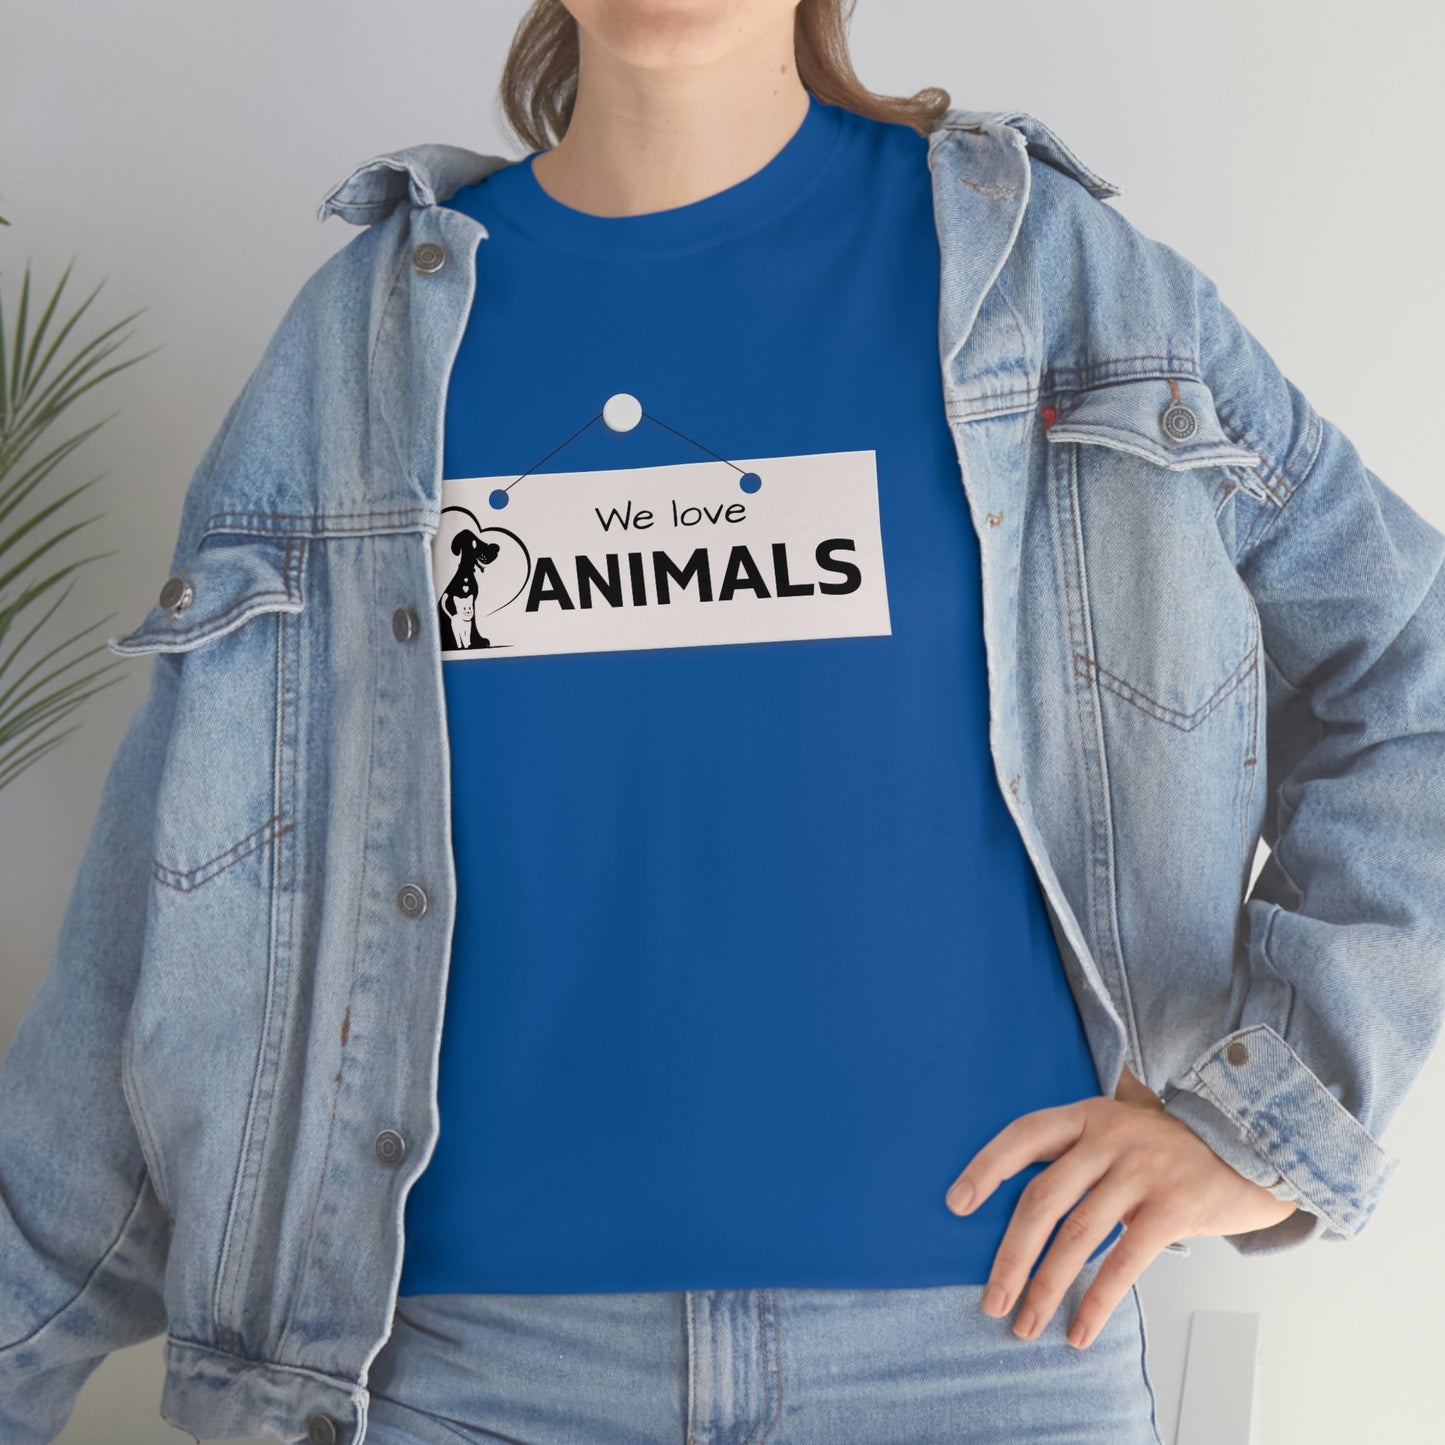 We love animals Logo plate design Graphic tee shirt